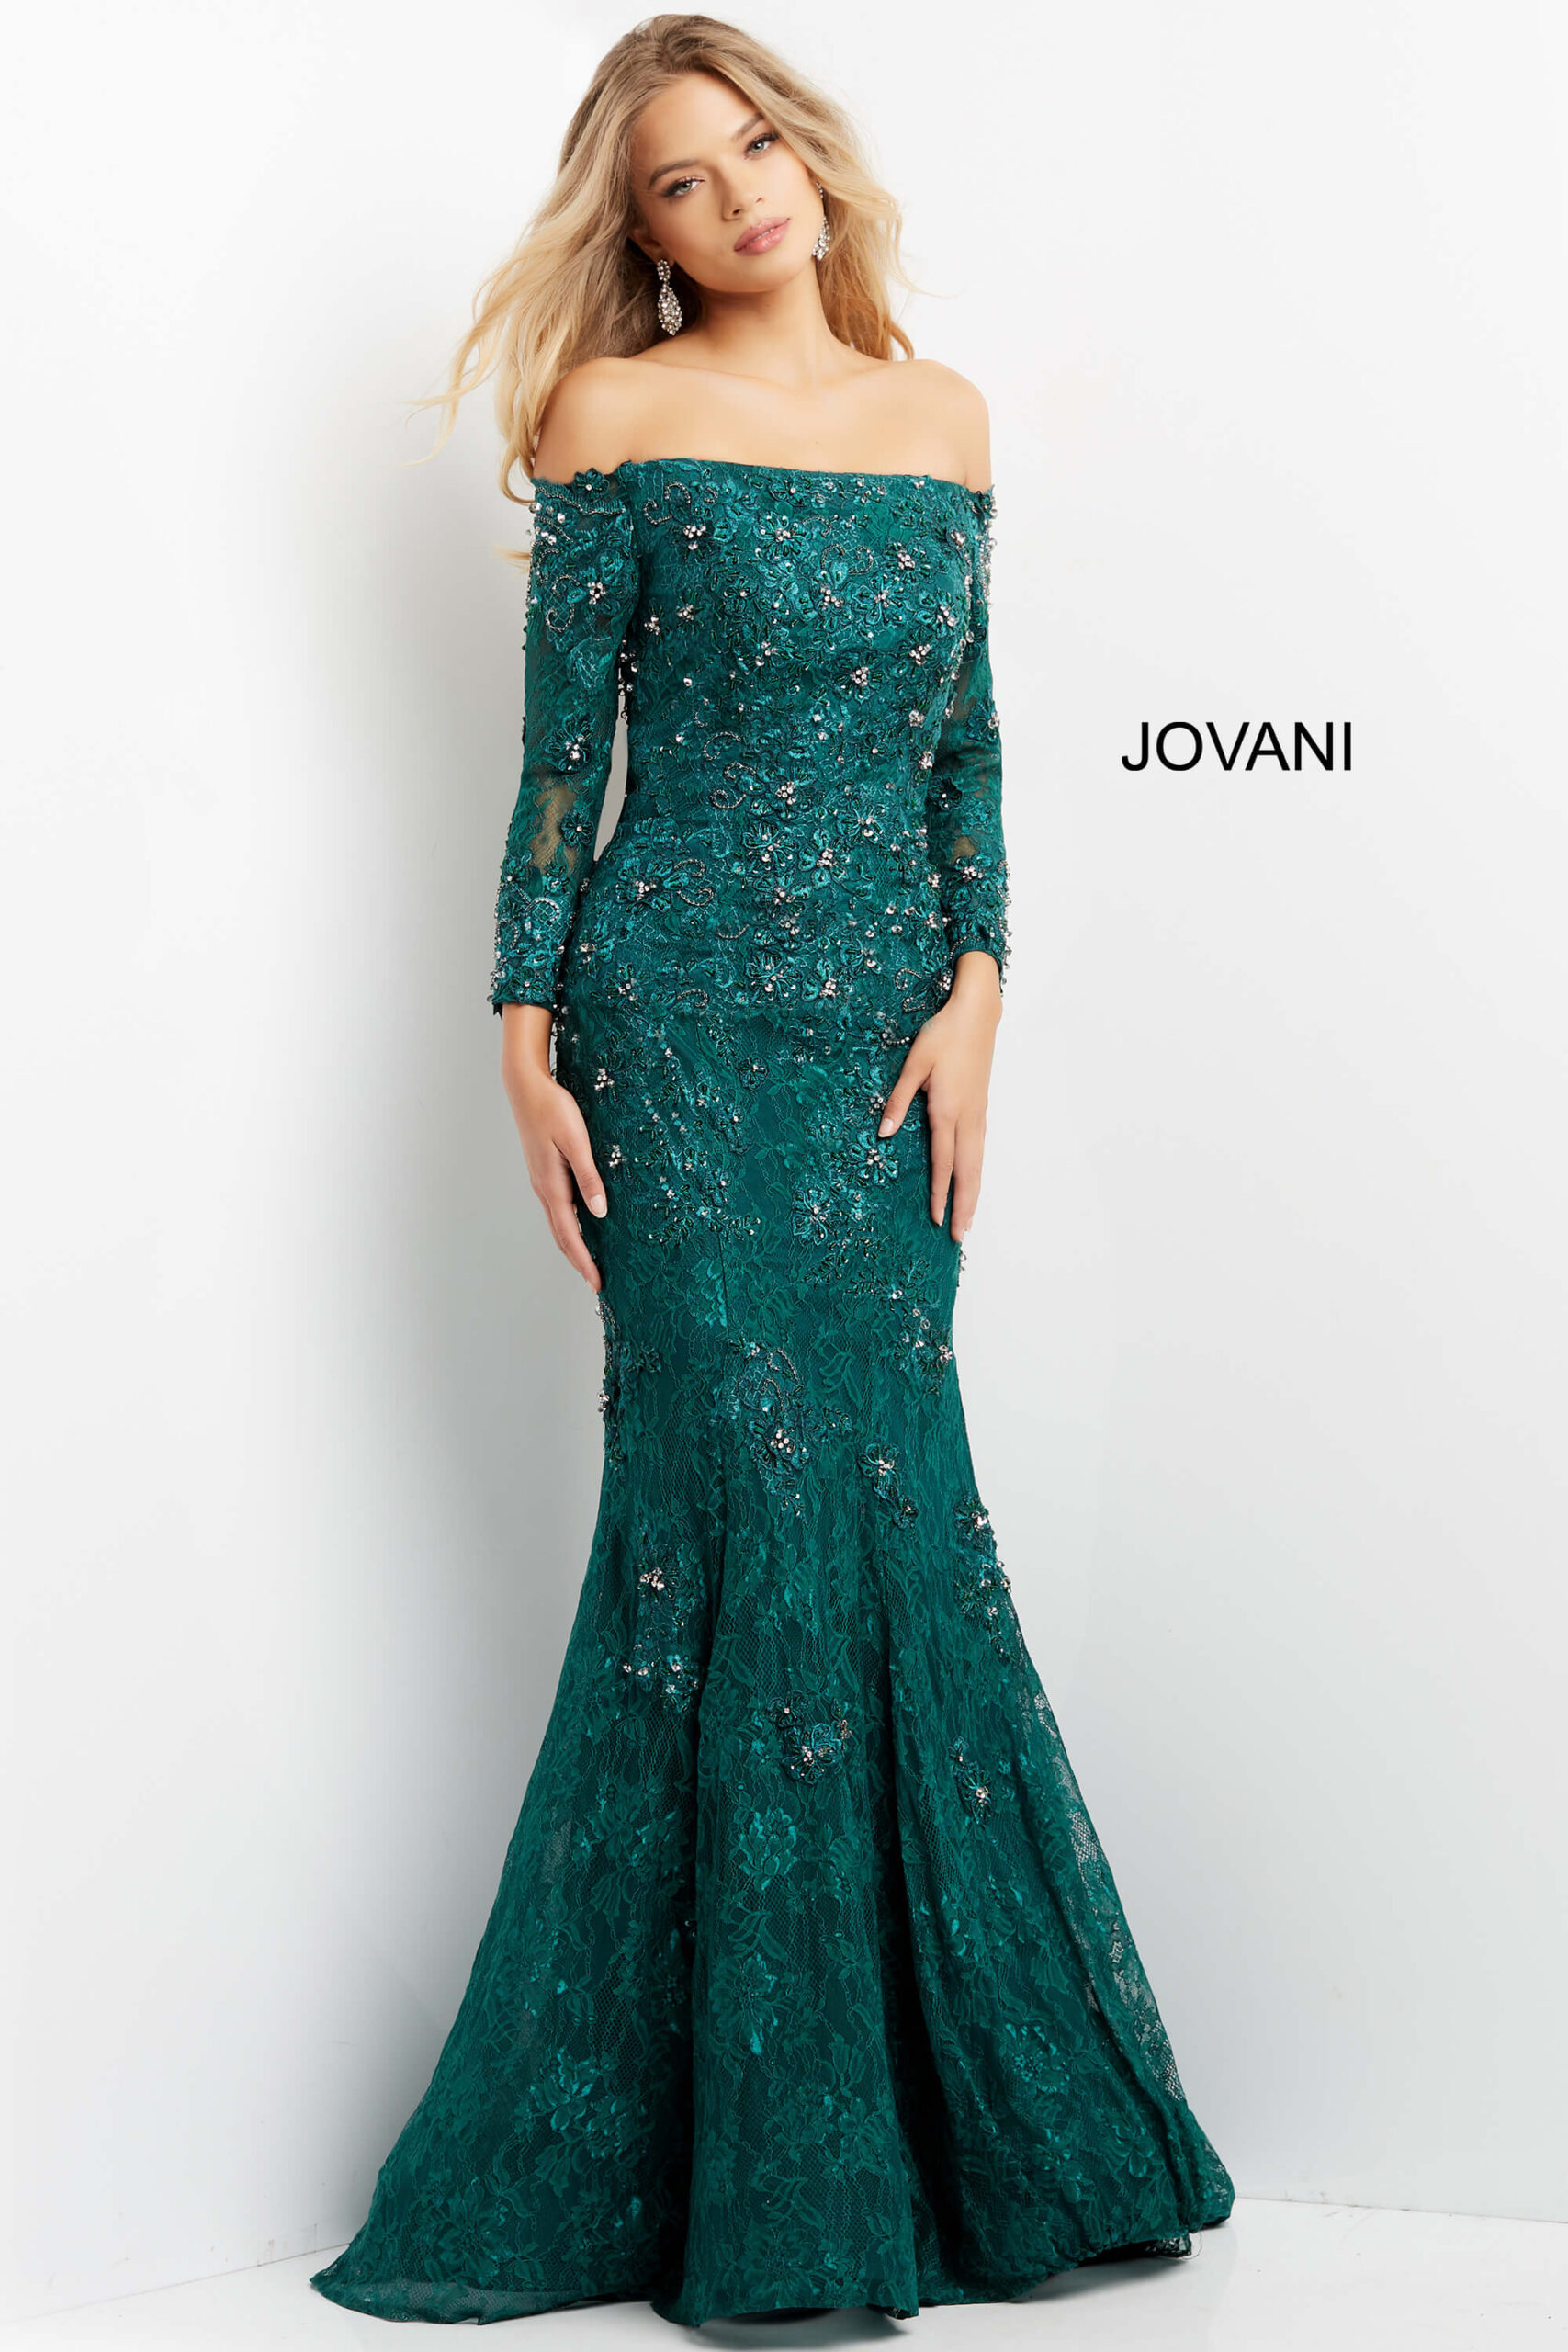 Jovani 03651 Emerald Three Quarter Sleeve Embellished Dress